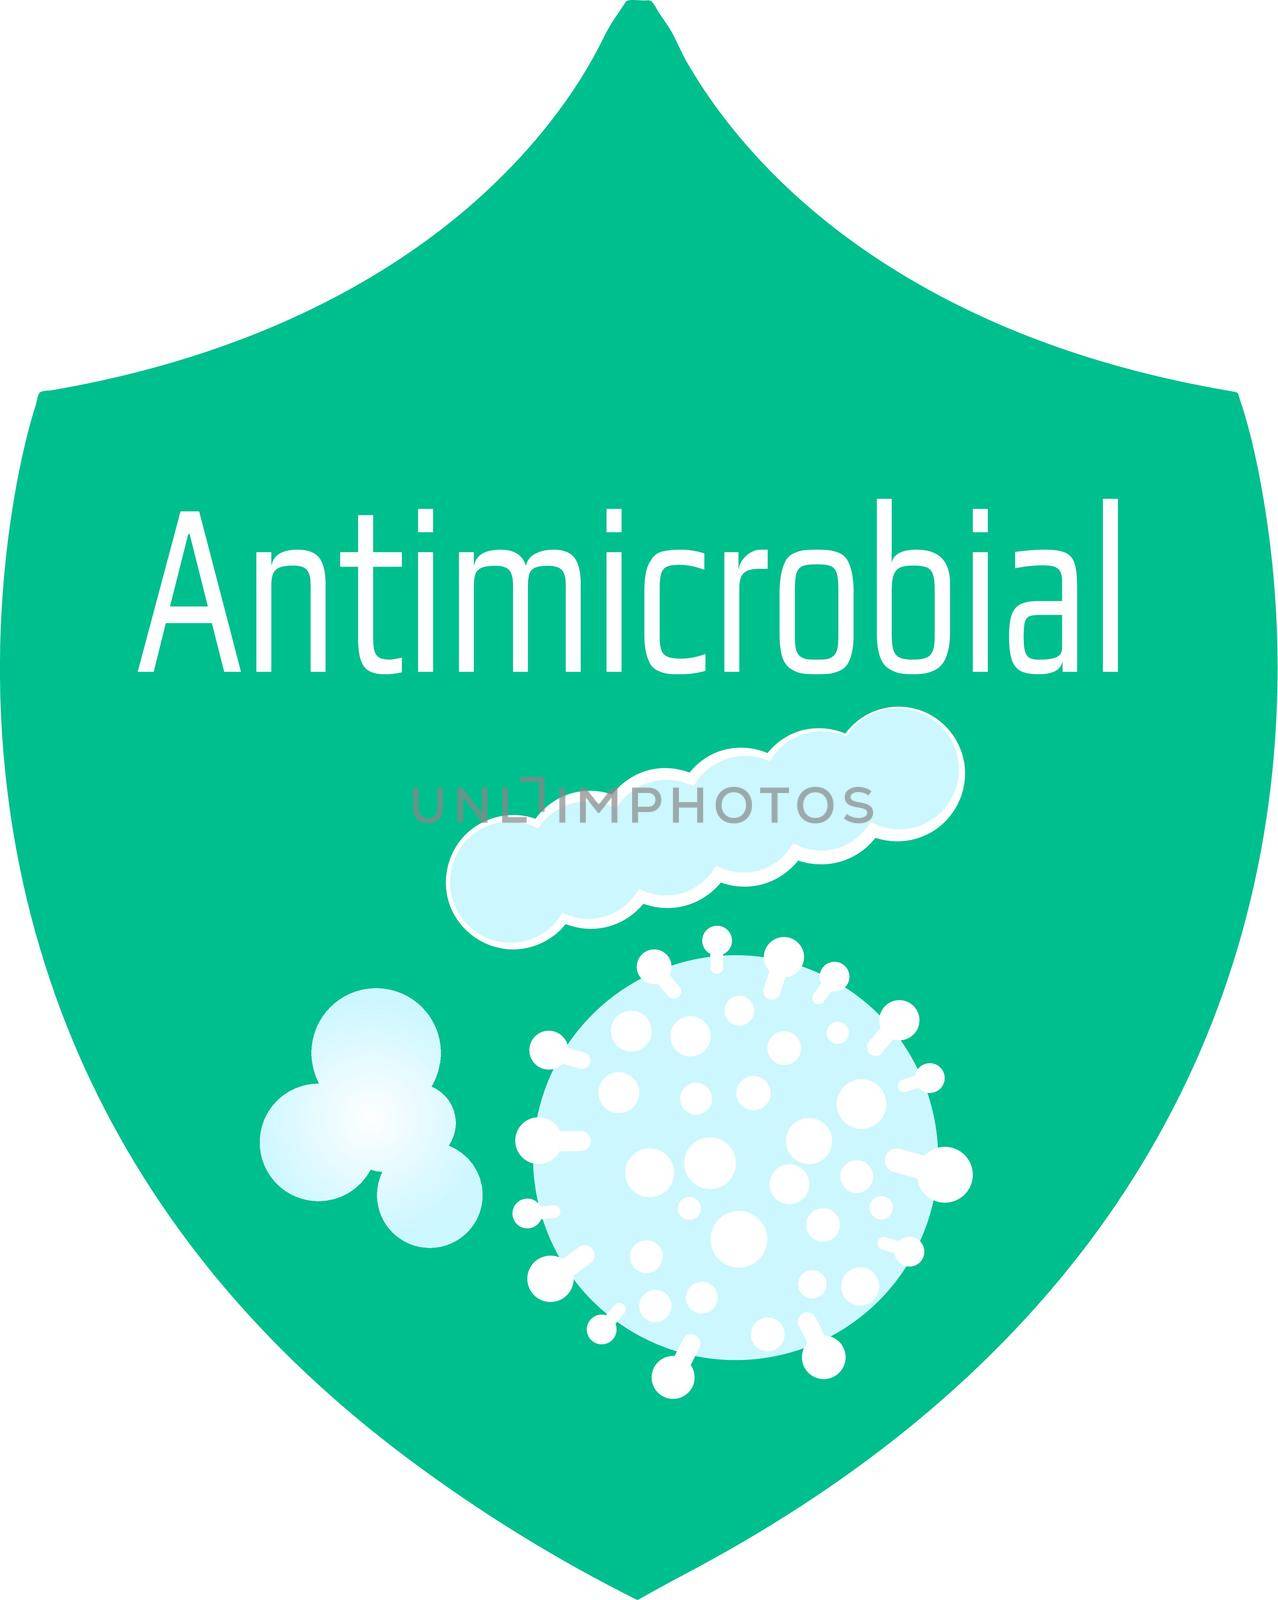 Antimicrobial shield sign Antimicrobial shield vector illustration on a white background isolated